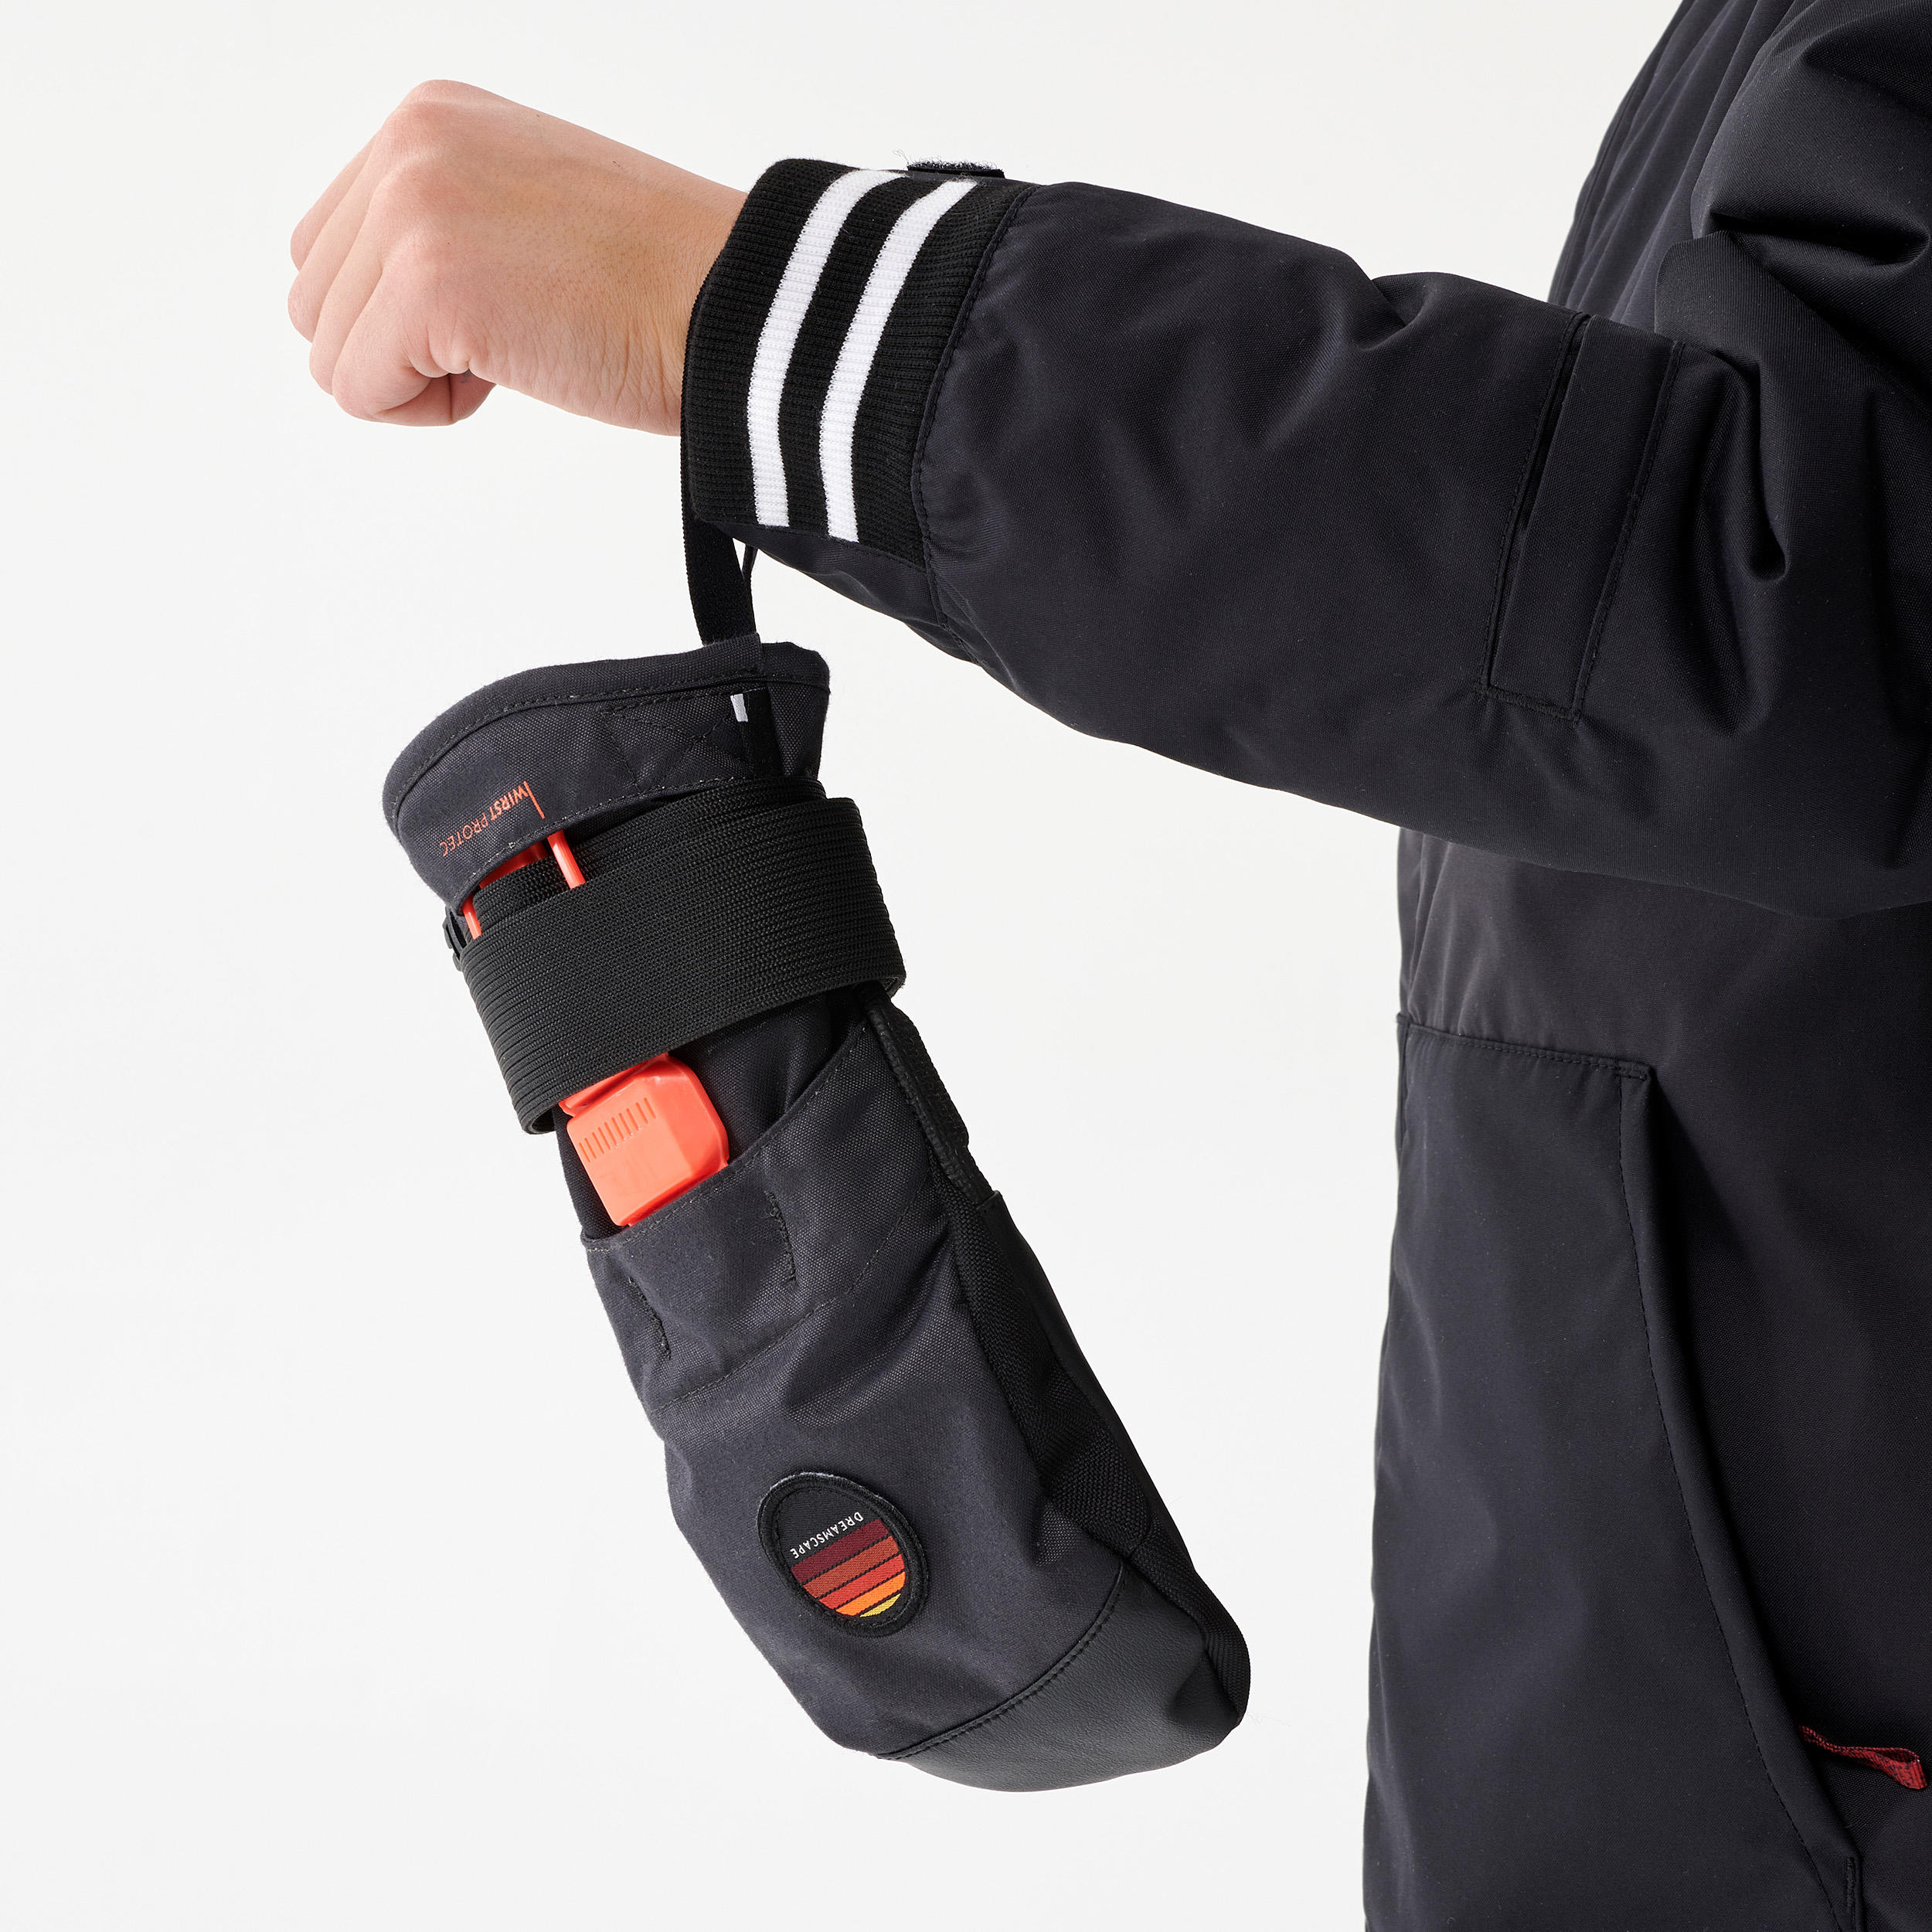 Children's snowboarding mittens - MI 500 JR Protect, black and orange 8/12